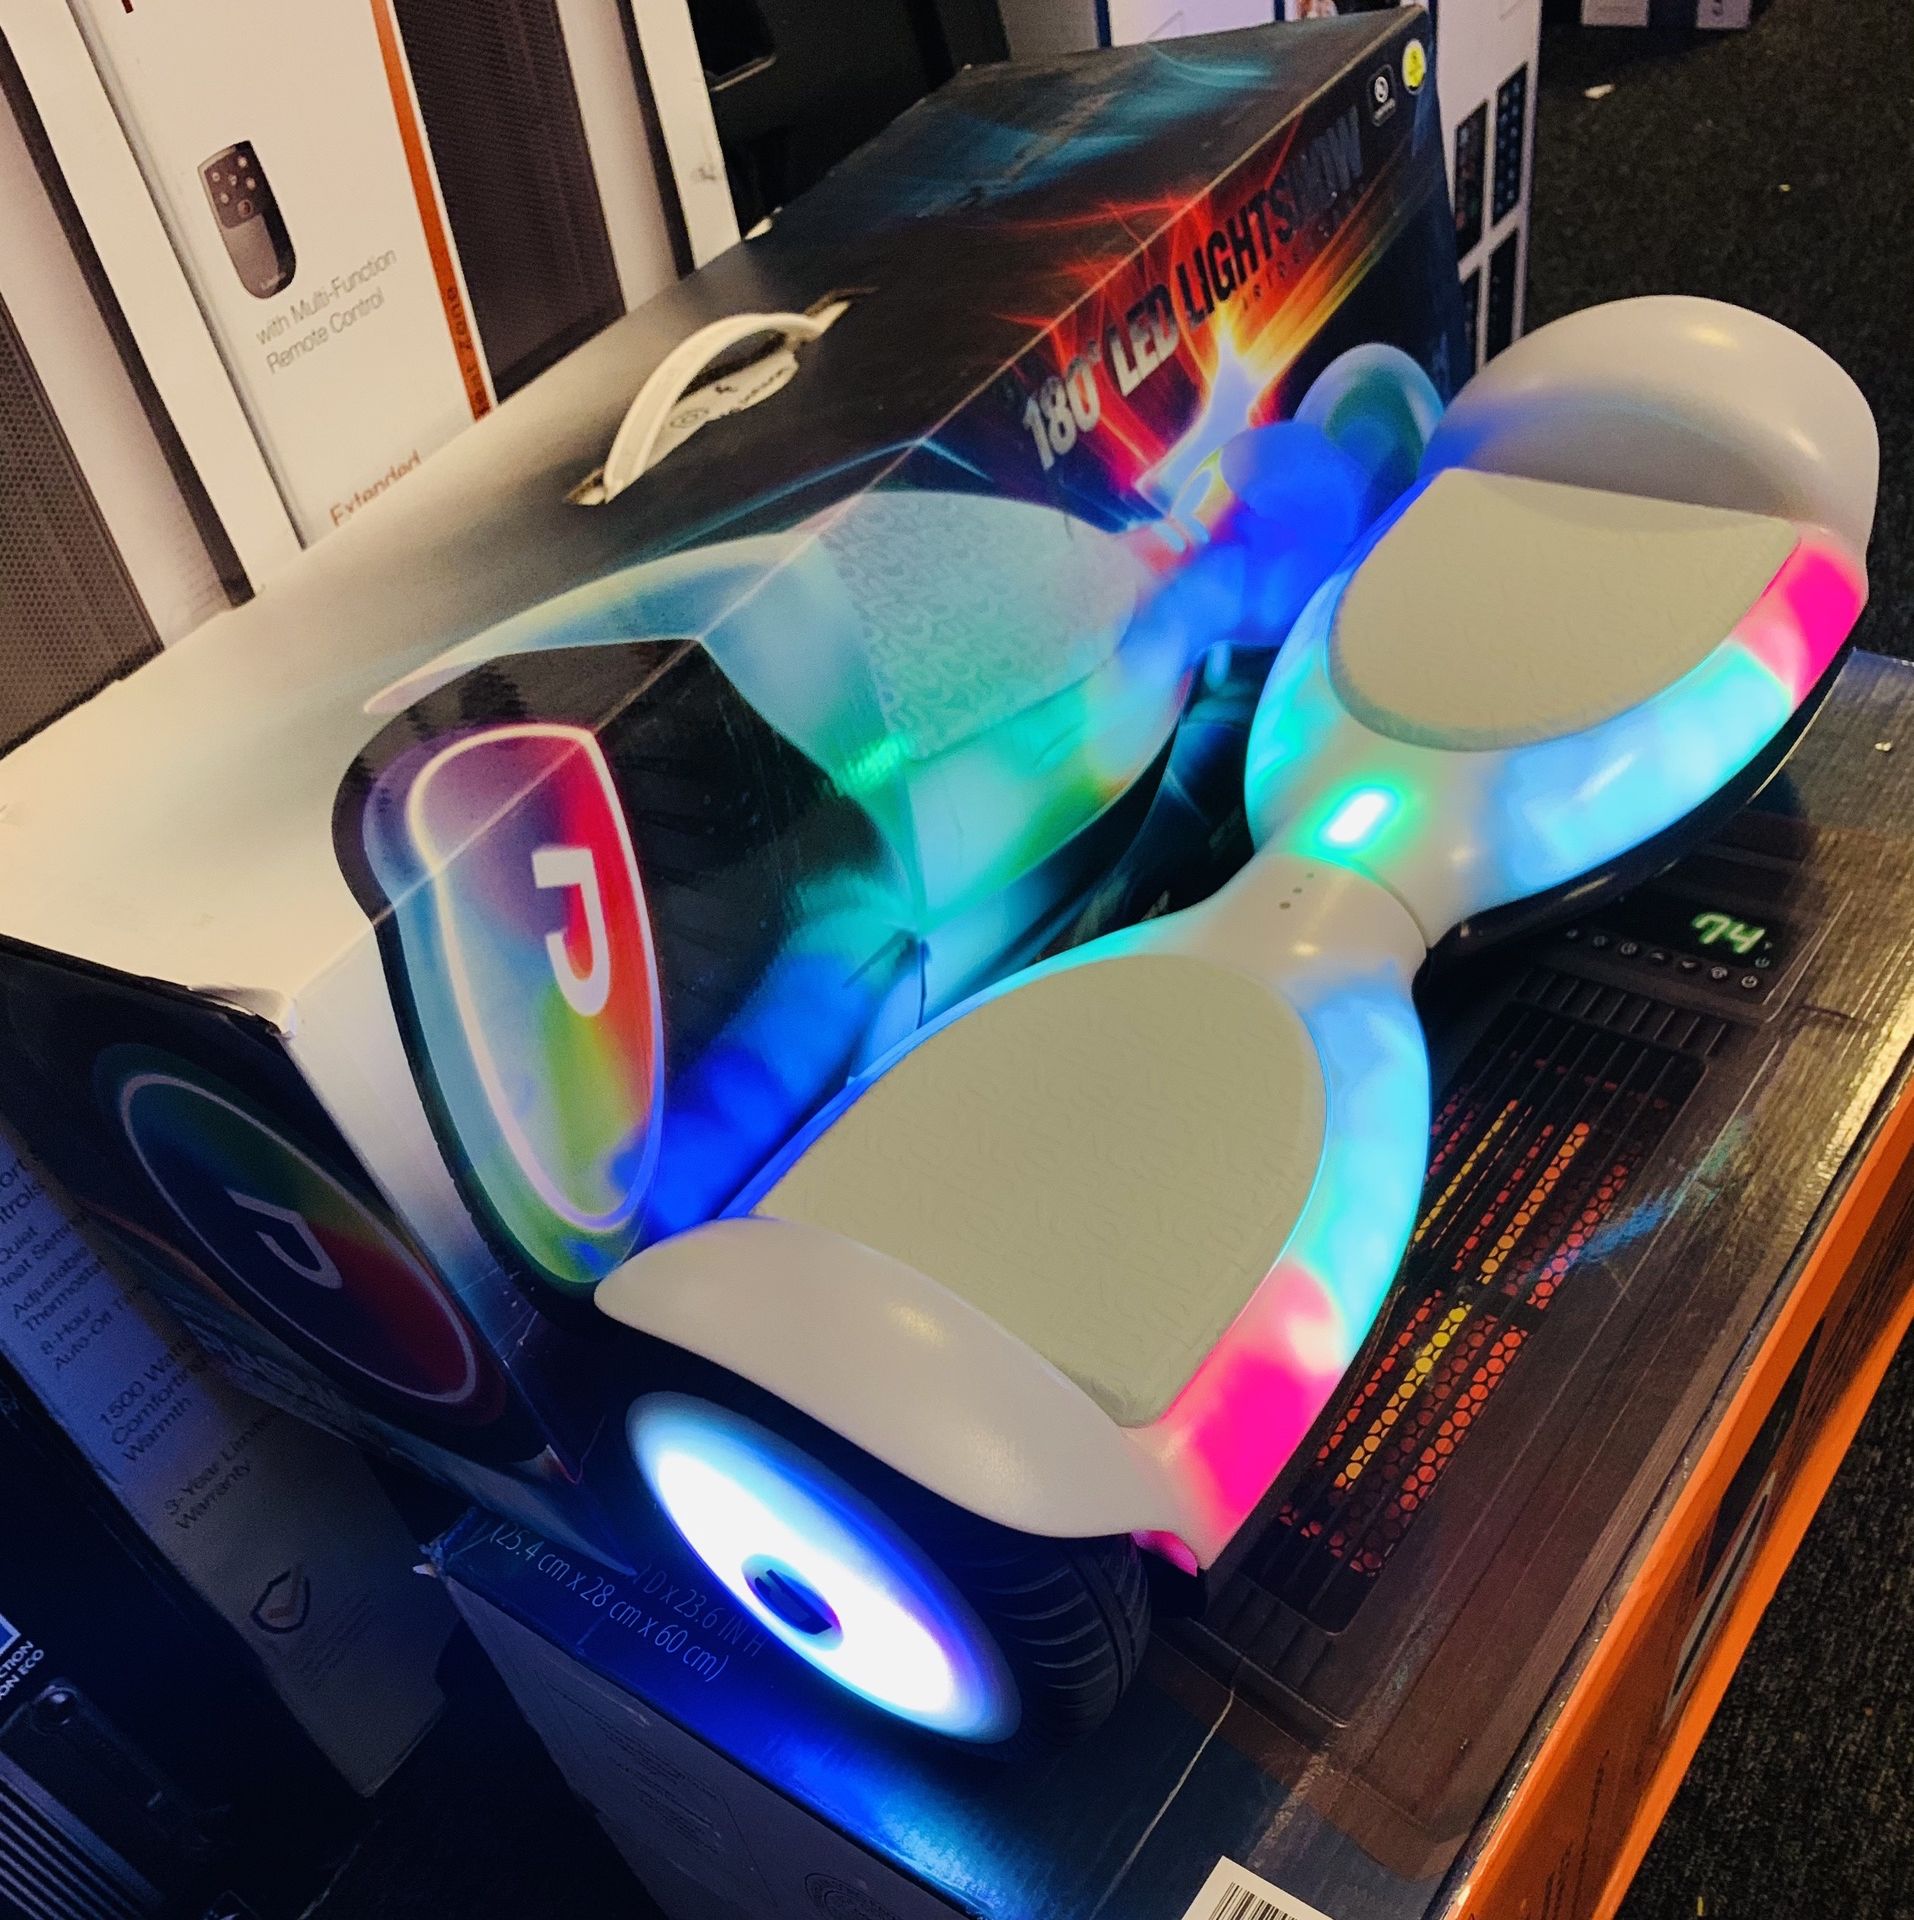 Jetson Plasma Iridescent Hoverboard